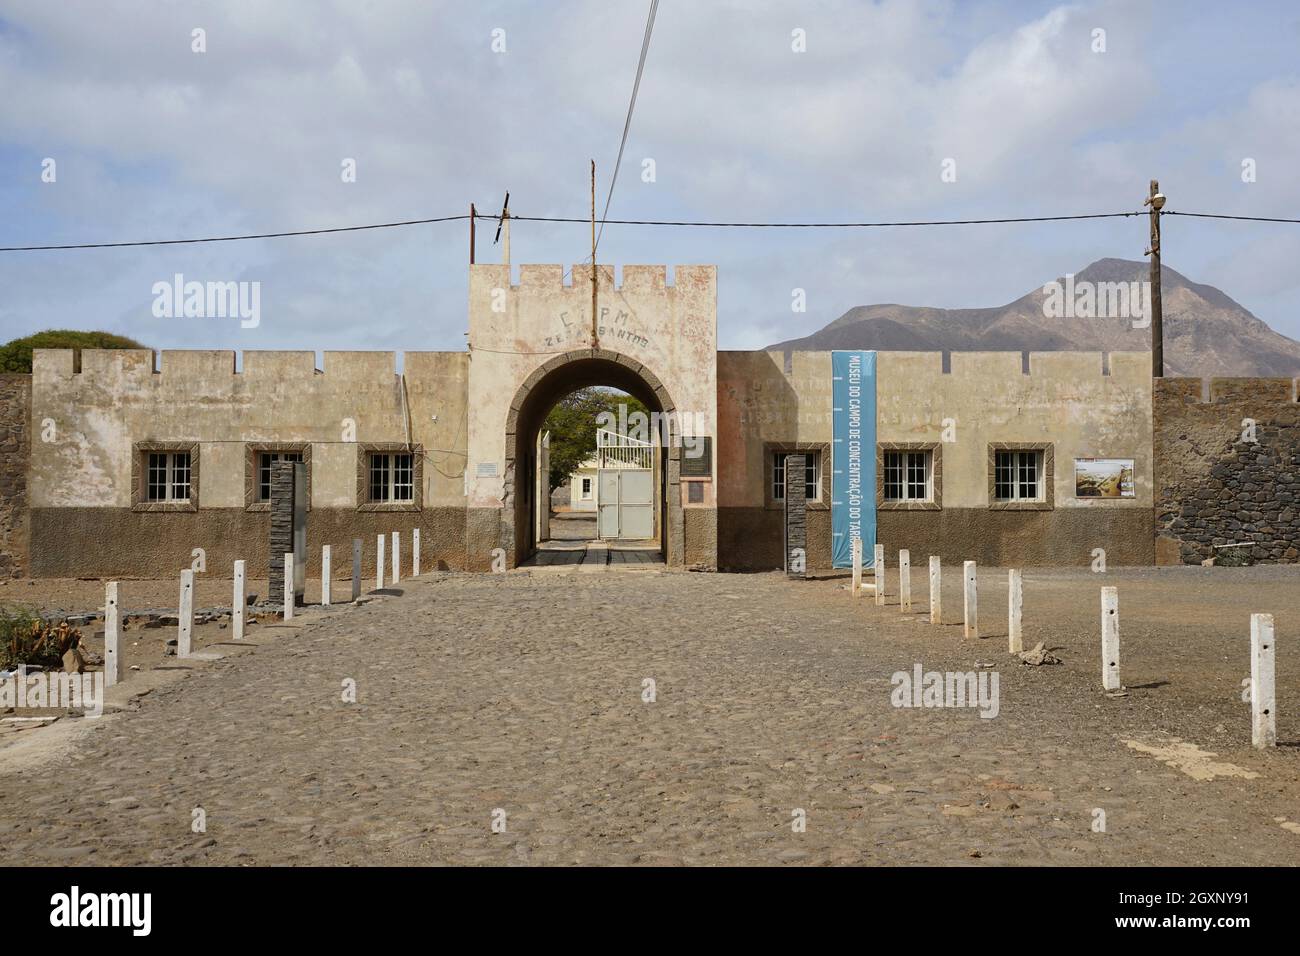 Entrance portal, infirmary, Tarrafal concentration camp, Monte Graciosa, Santiago Island, Republic of Cape Verde Stock Photo